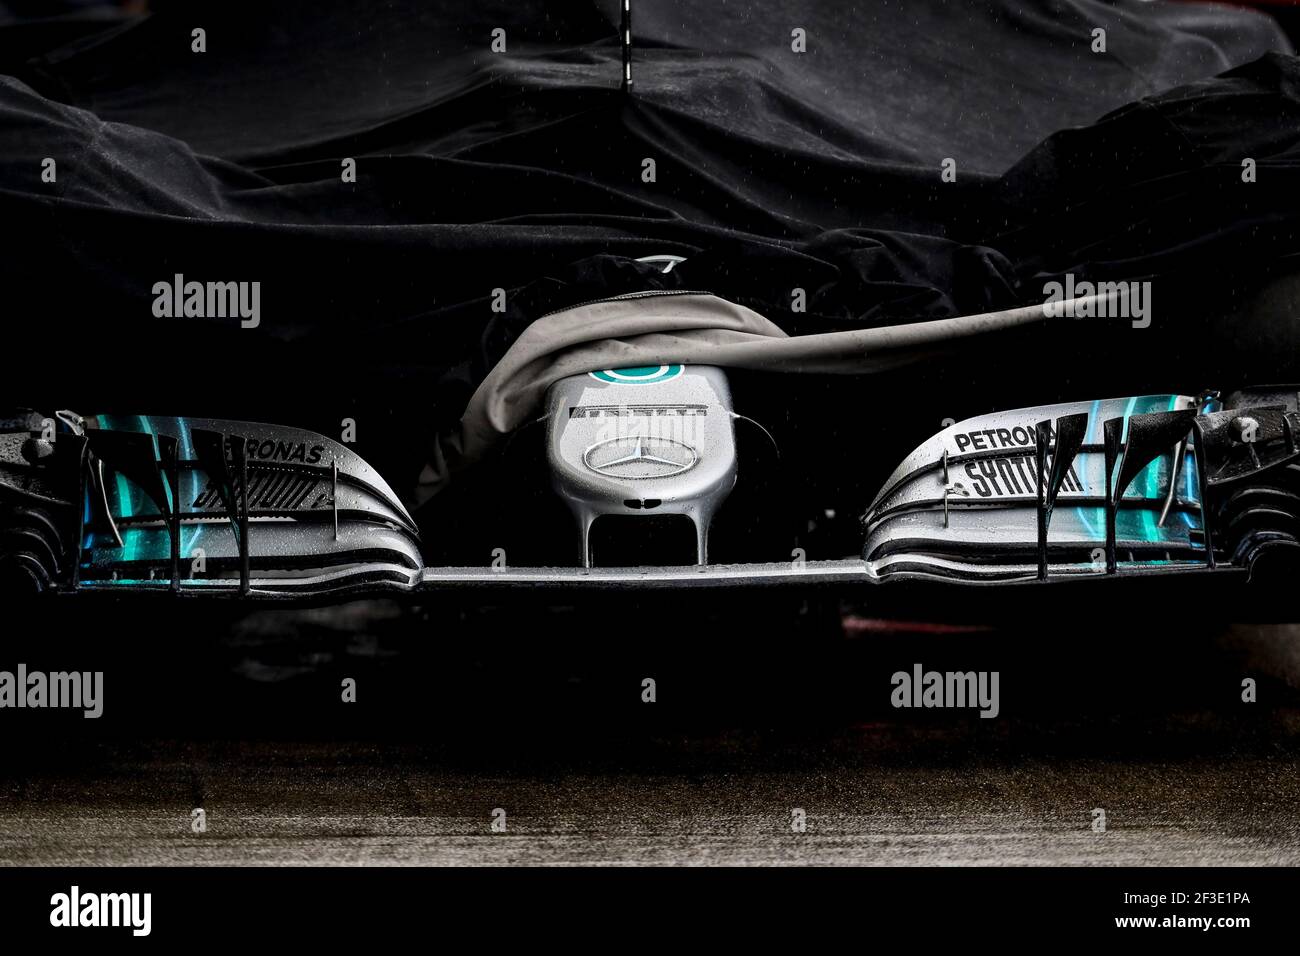 44 HAMILTON Lewis (gbr), Mercedes W09 Hybrid EQ Power+ team Mercedes GP,  body, carrosserie, during the